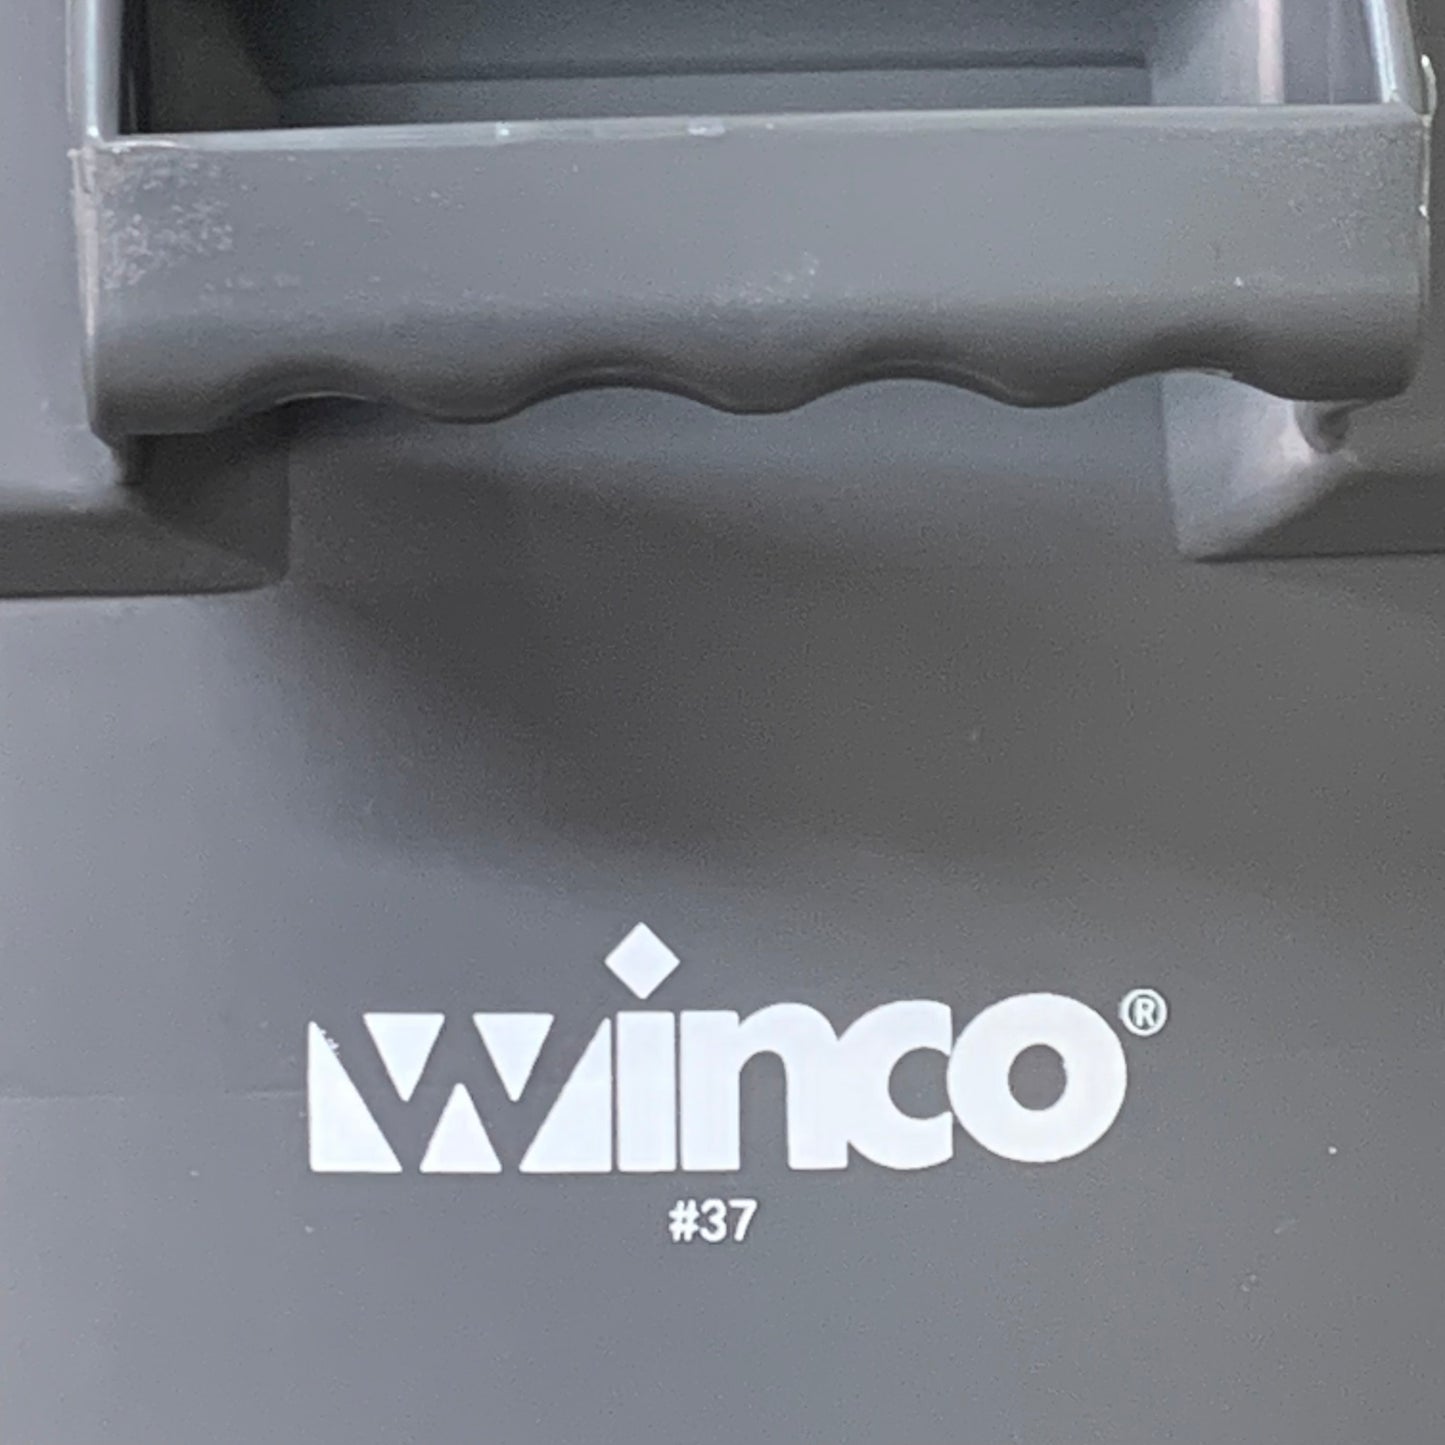 WINCO (3 PACK) Heavy Duty Trash Can Plastic 32 Gallon Gray PTC-32G